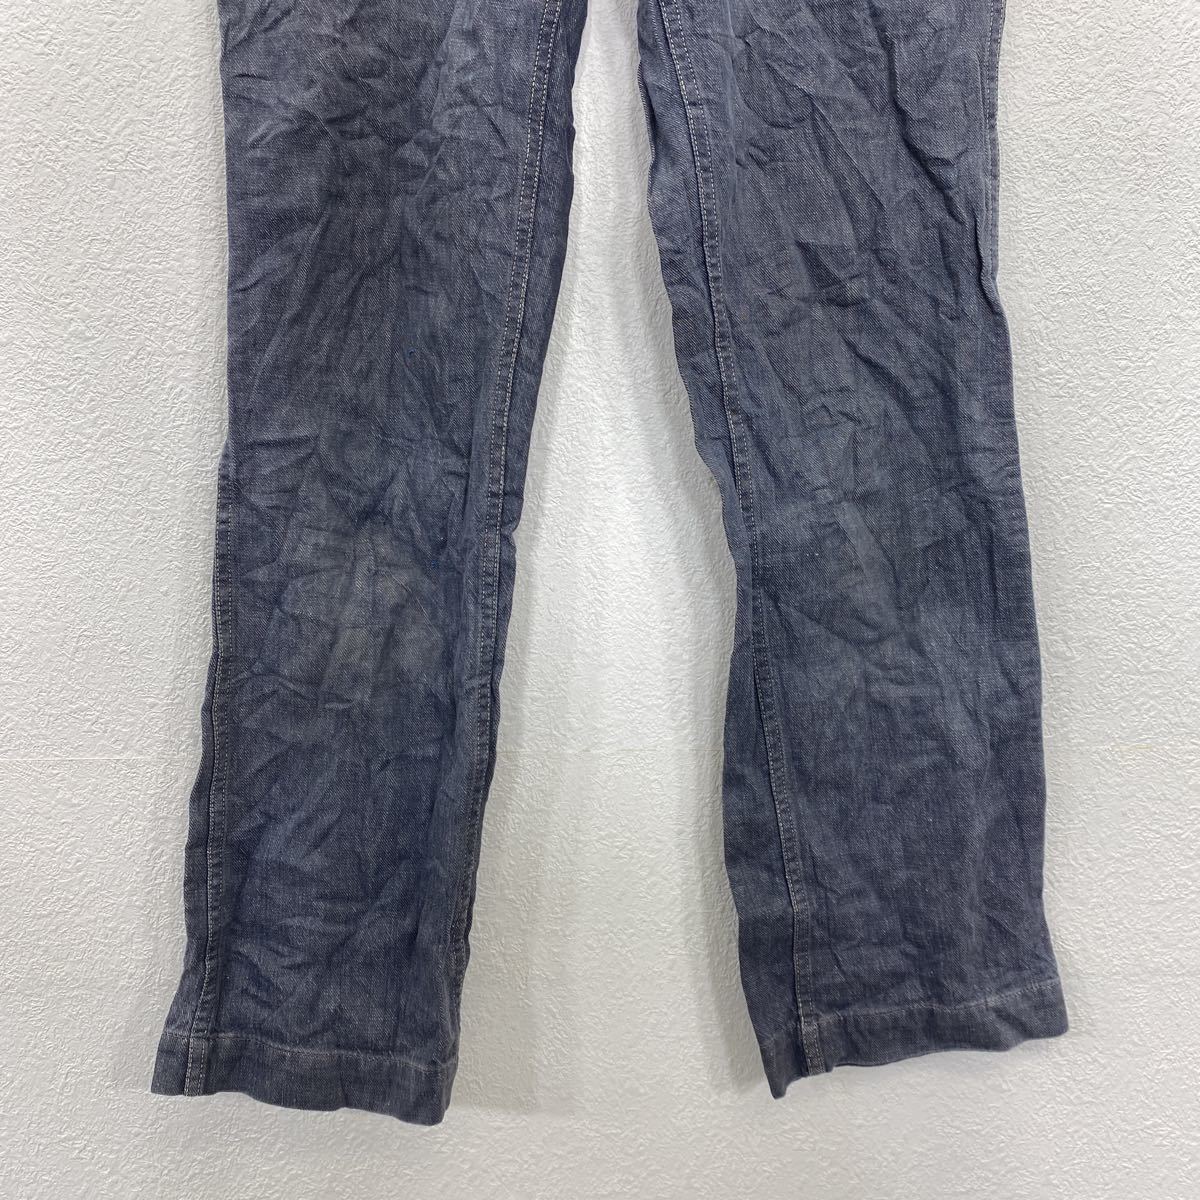  Work * painter's pants W29 ранг женский евро голубой темно-синий б/у одежда . America скупка 2303-345